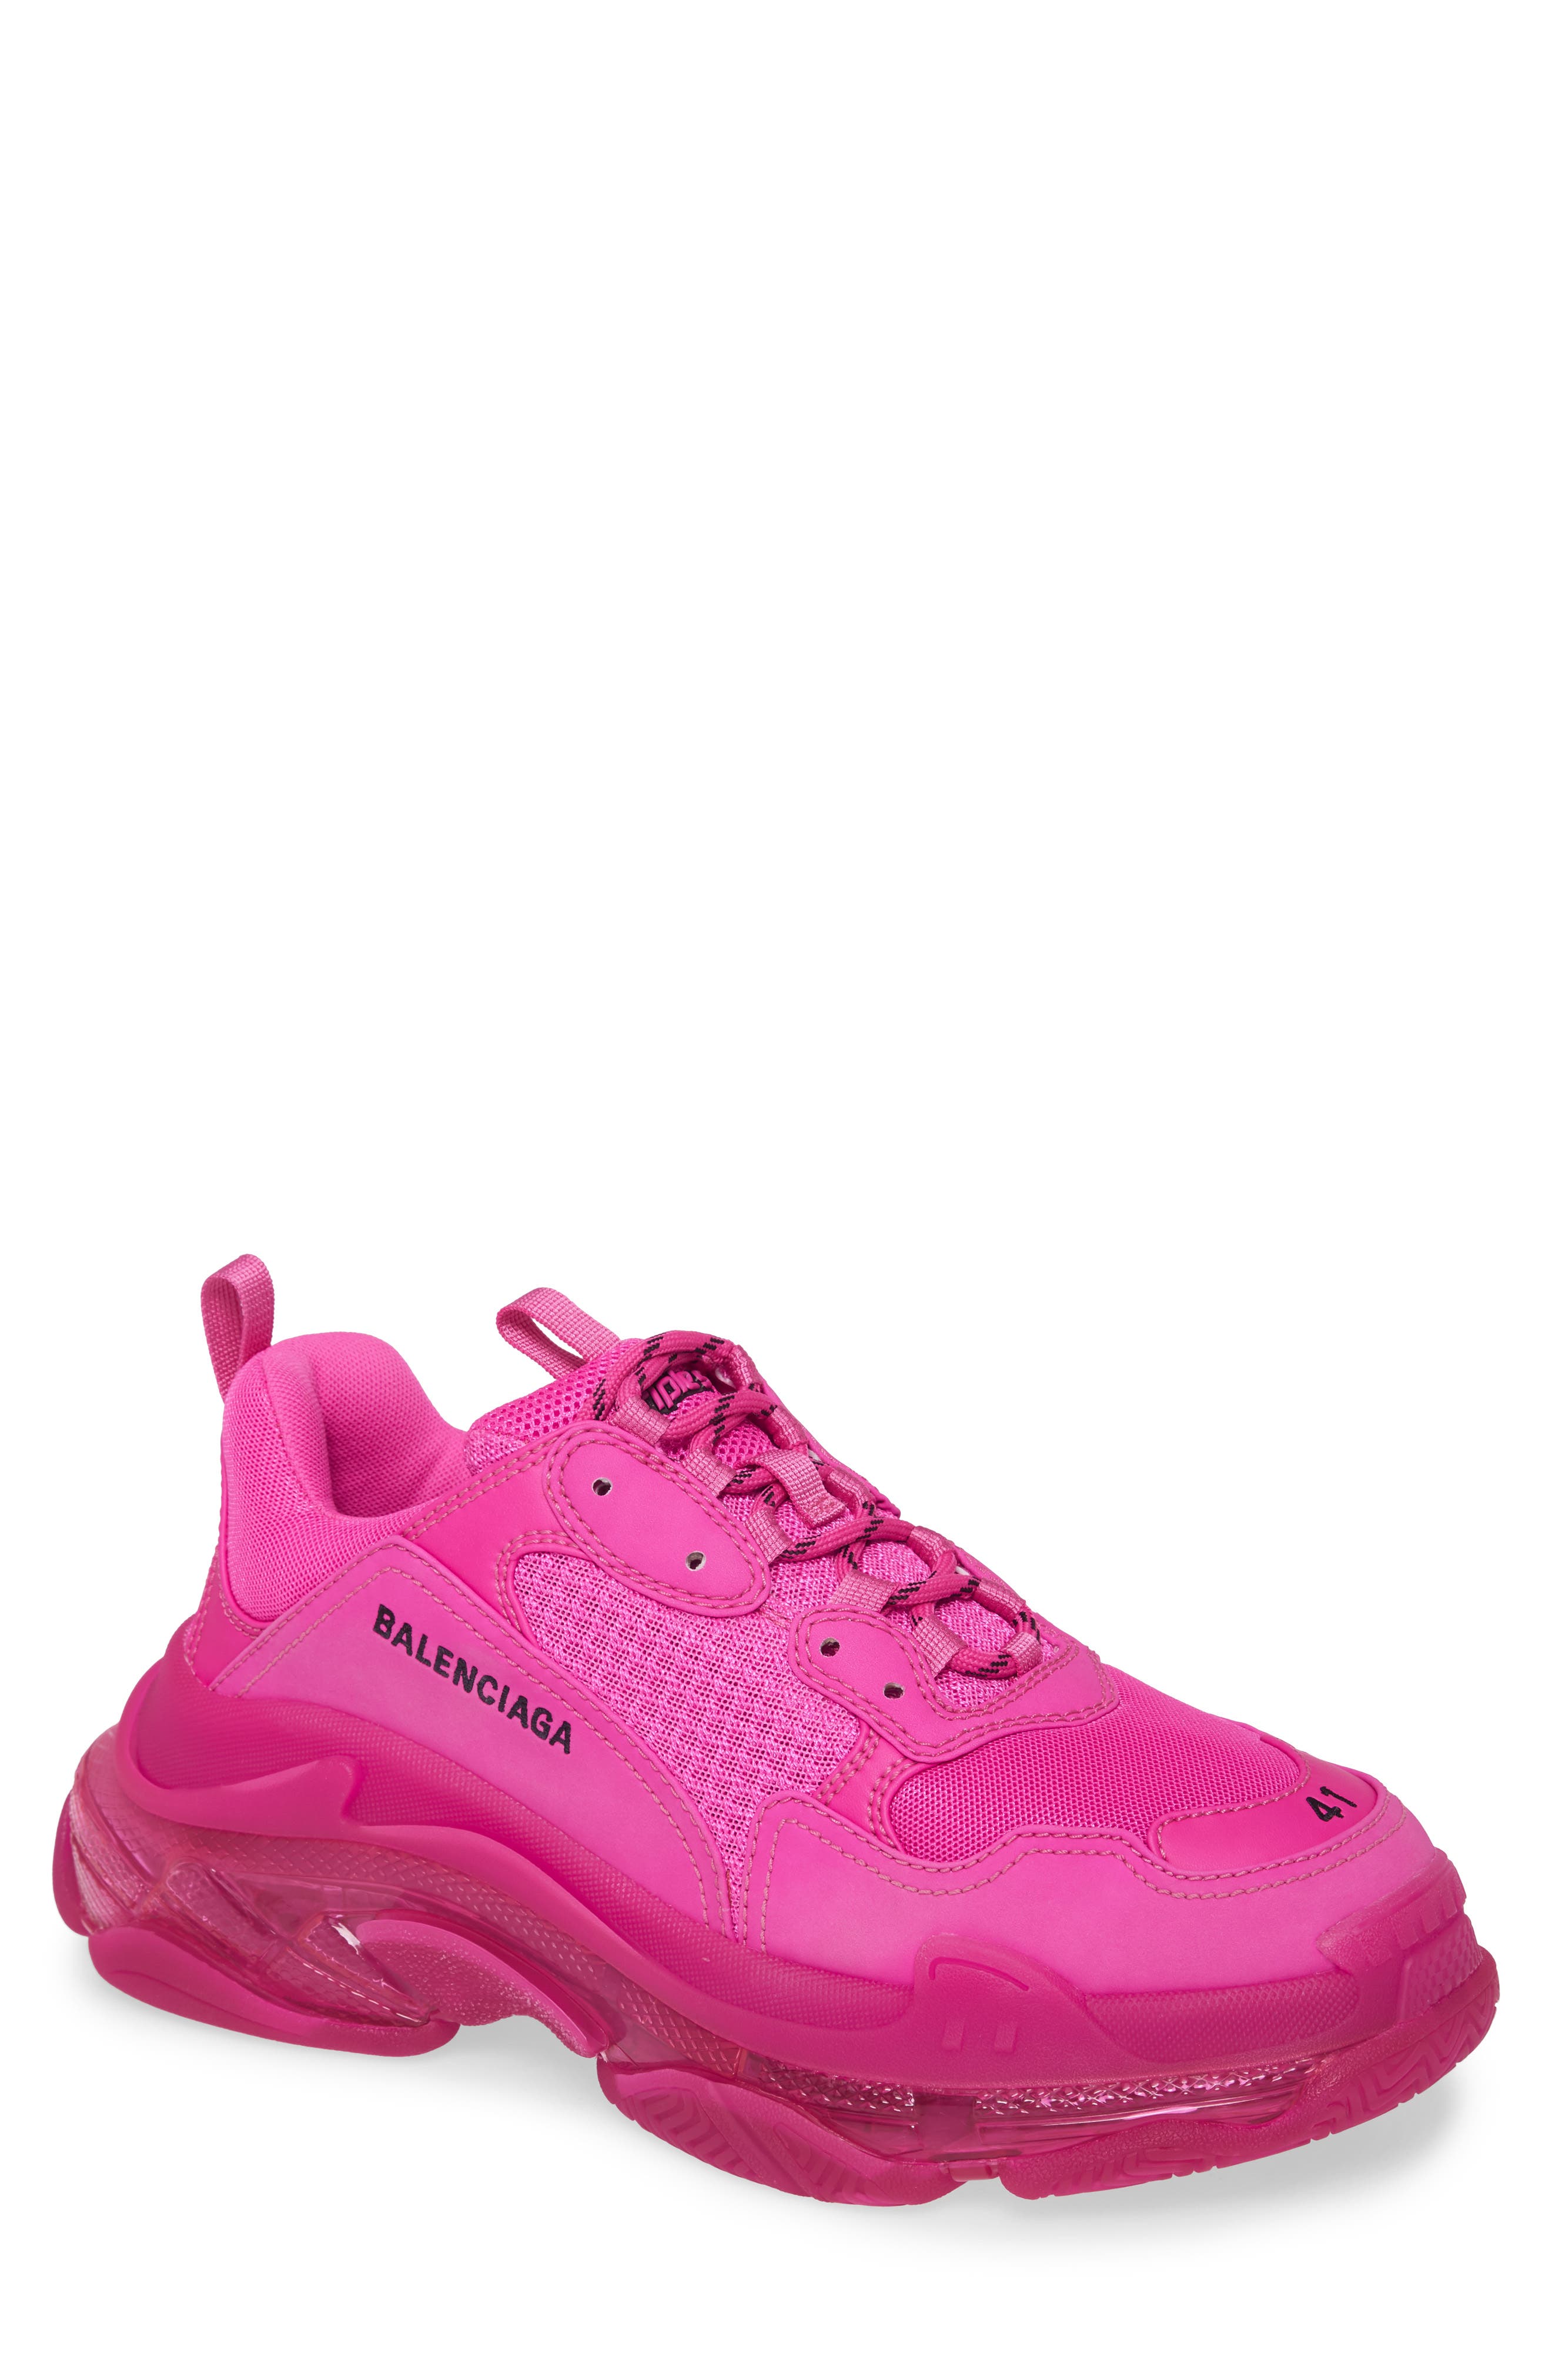 Balenciaga Triple S Sneaker Pink Black in 2019 Pink